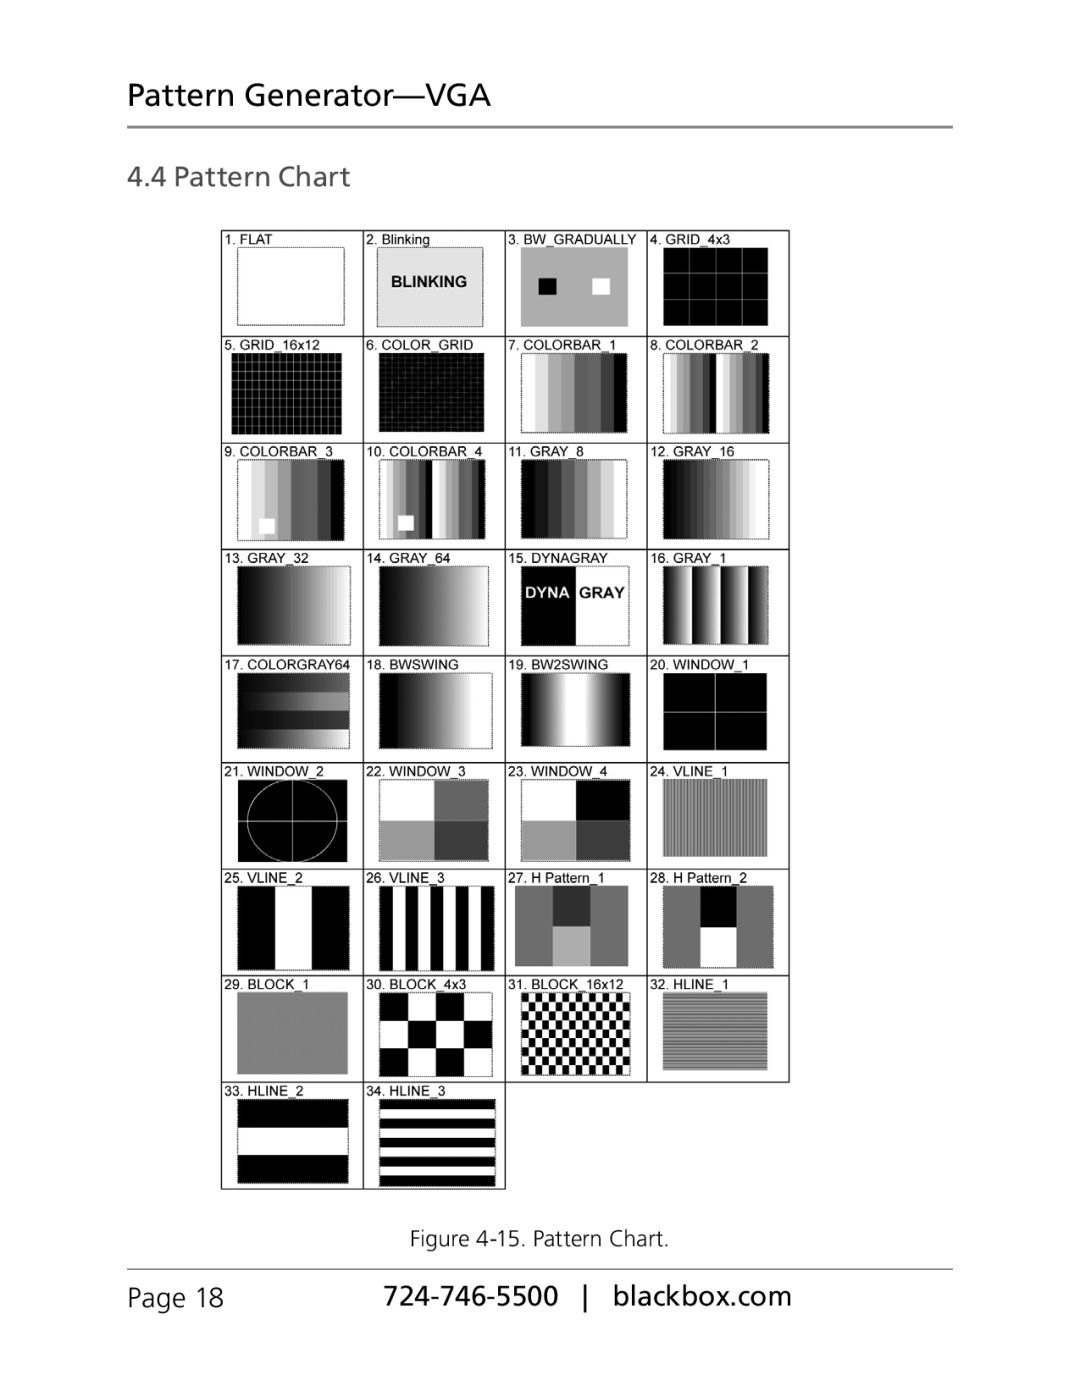 Black Box PG-VGA, BLACK BOX Pattern GeneratorVGA manual Pattern Generator-VGA, Page, 15. Pattern Chart 